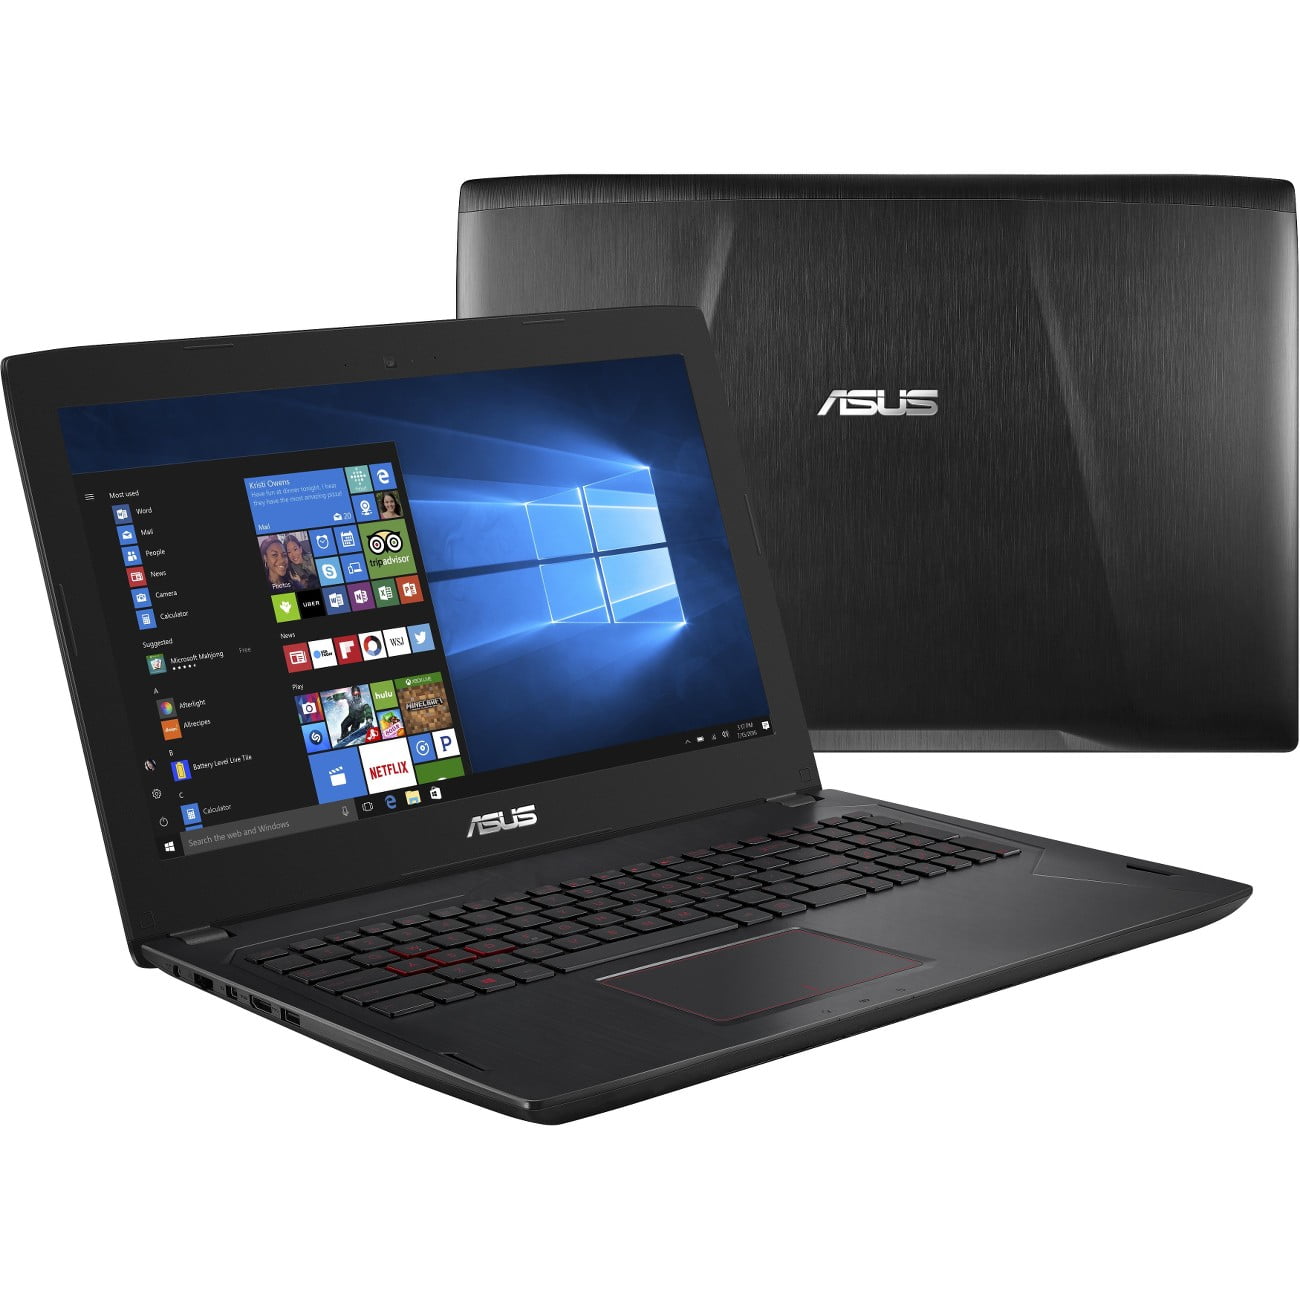 Asus 15.6" Full HD Gaming Laptop, Intel Core i7 i7-7700HQ, GeForce GTX 1060 3 GB, 1TB HD, 128GB SSD, Windows 10, FX502VM-AS73 - Walmart.com